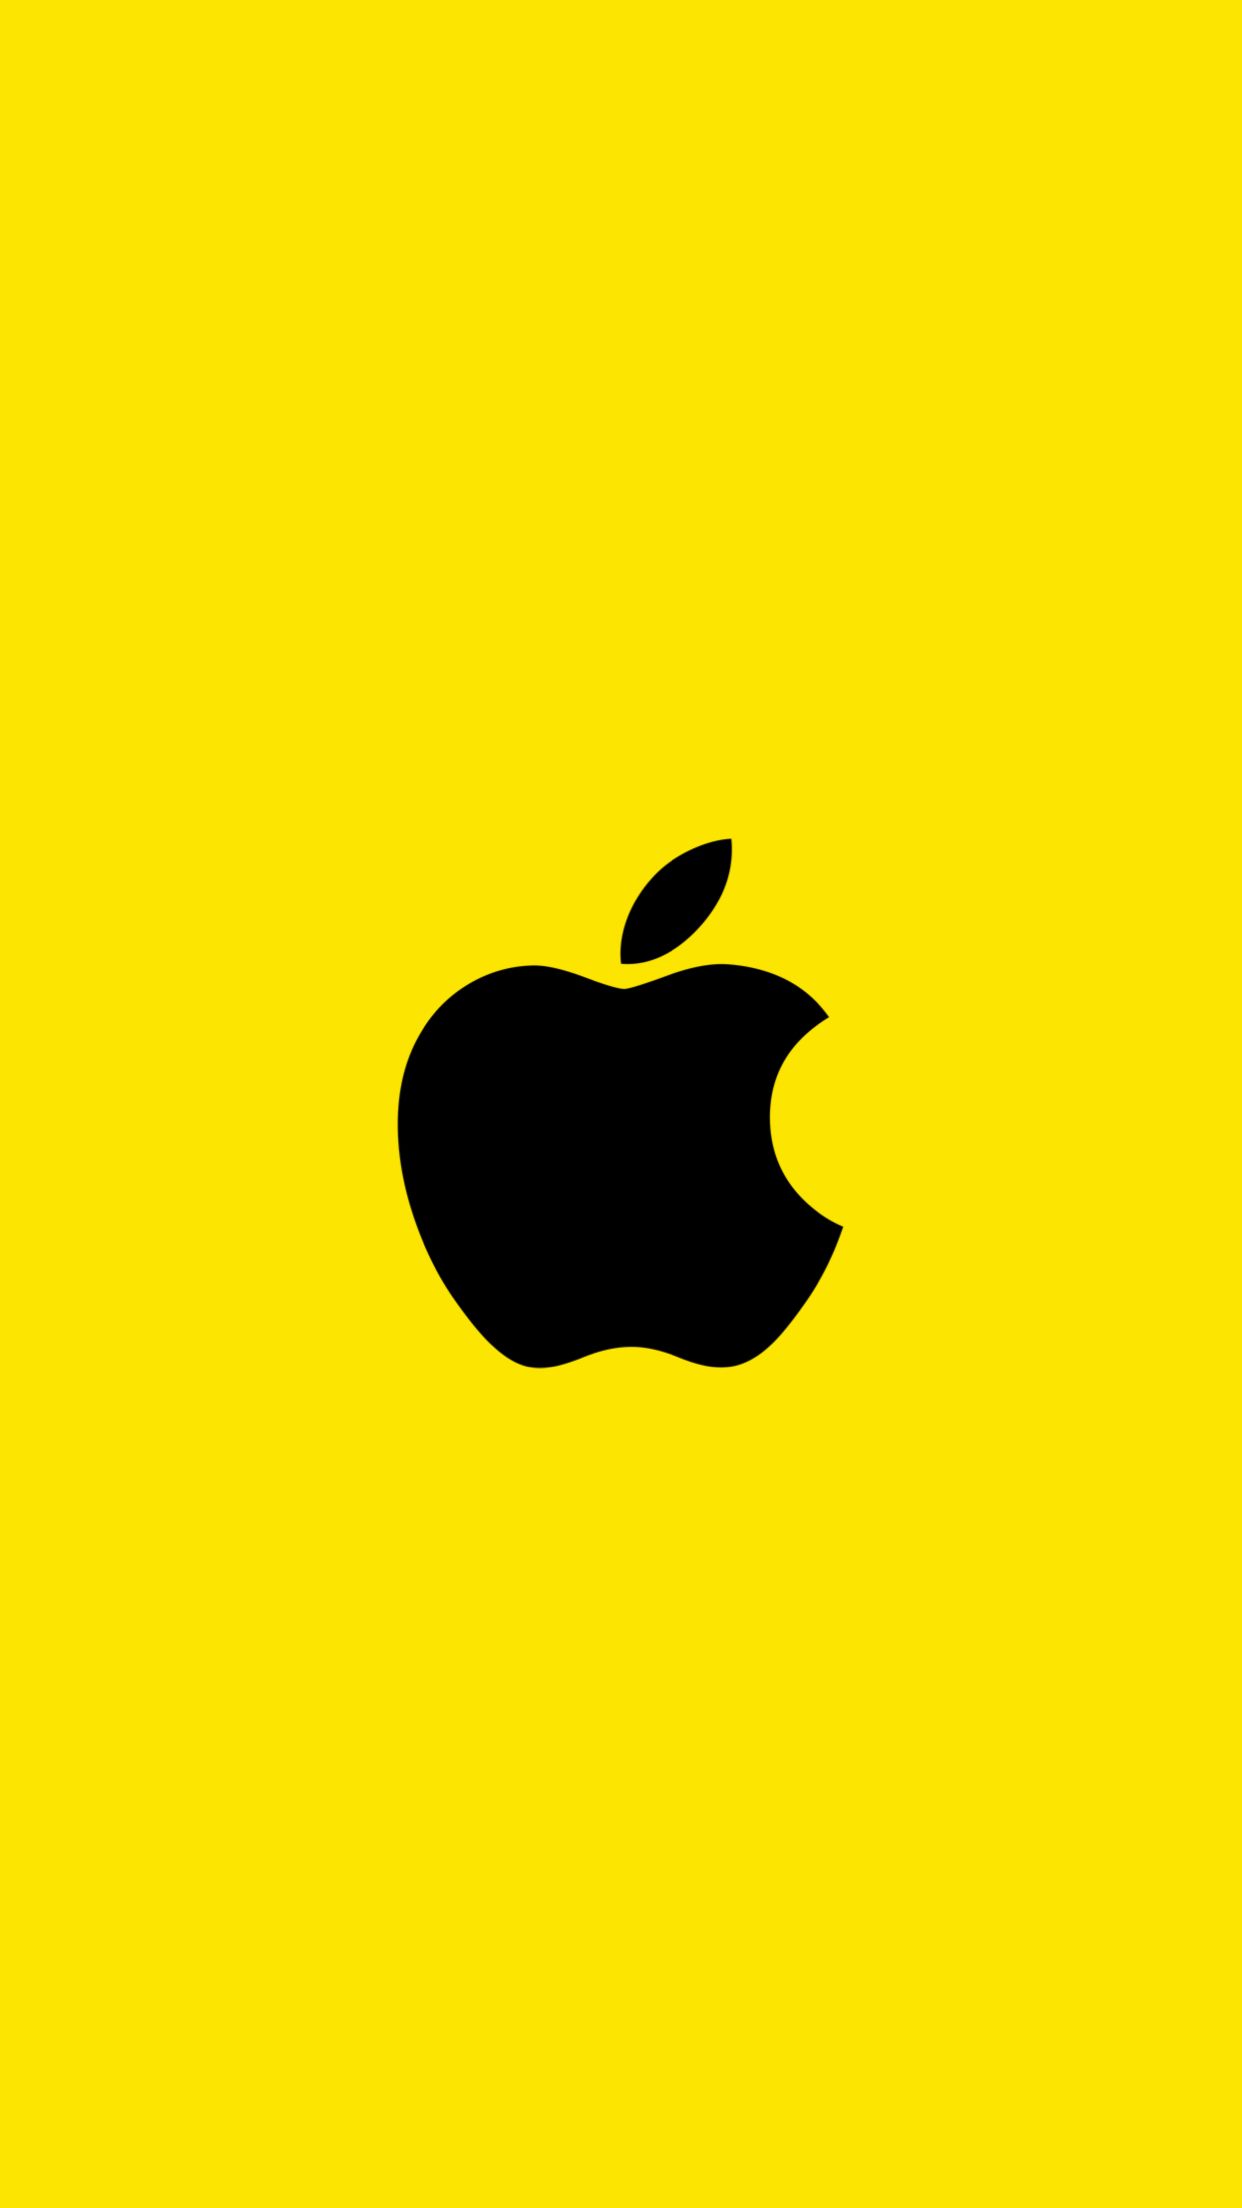 Yellow apple logo. Apple wallpaper iphone, Apple logo wallpaper iphone, iPhone wallpaper photography